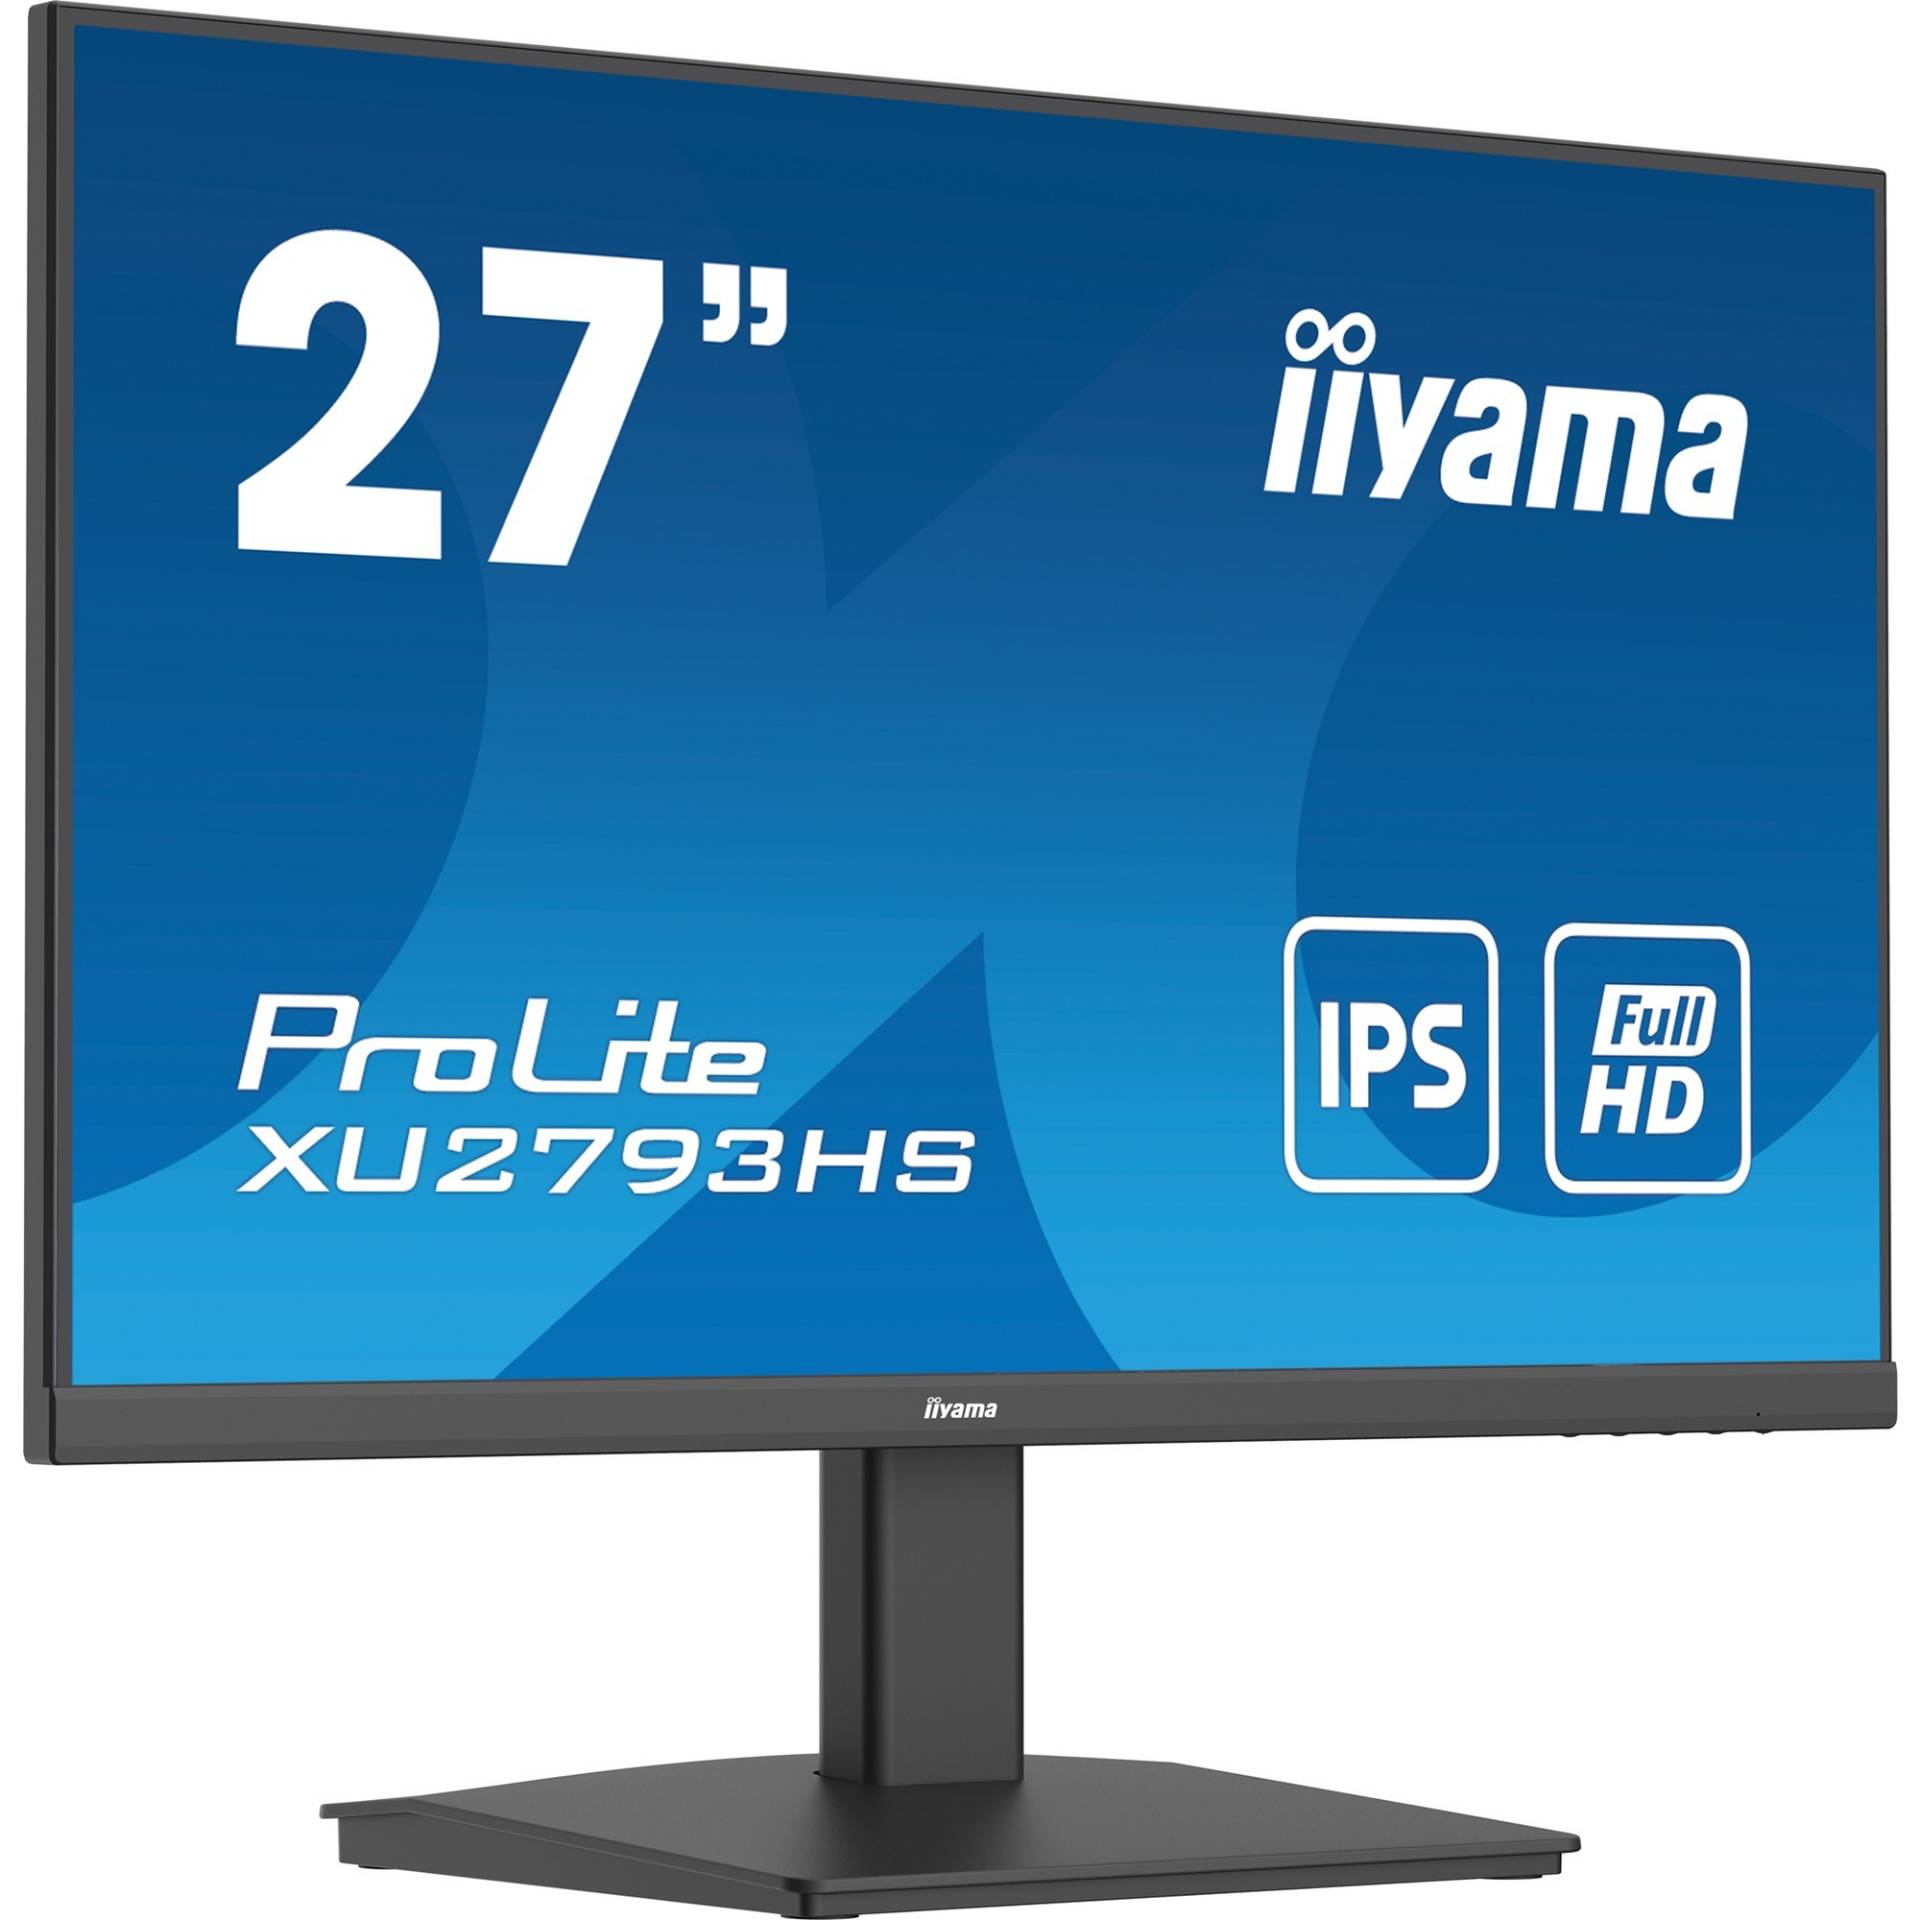 ProLite XU2793HS-B6, LED-Monitor von Iiyama